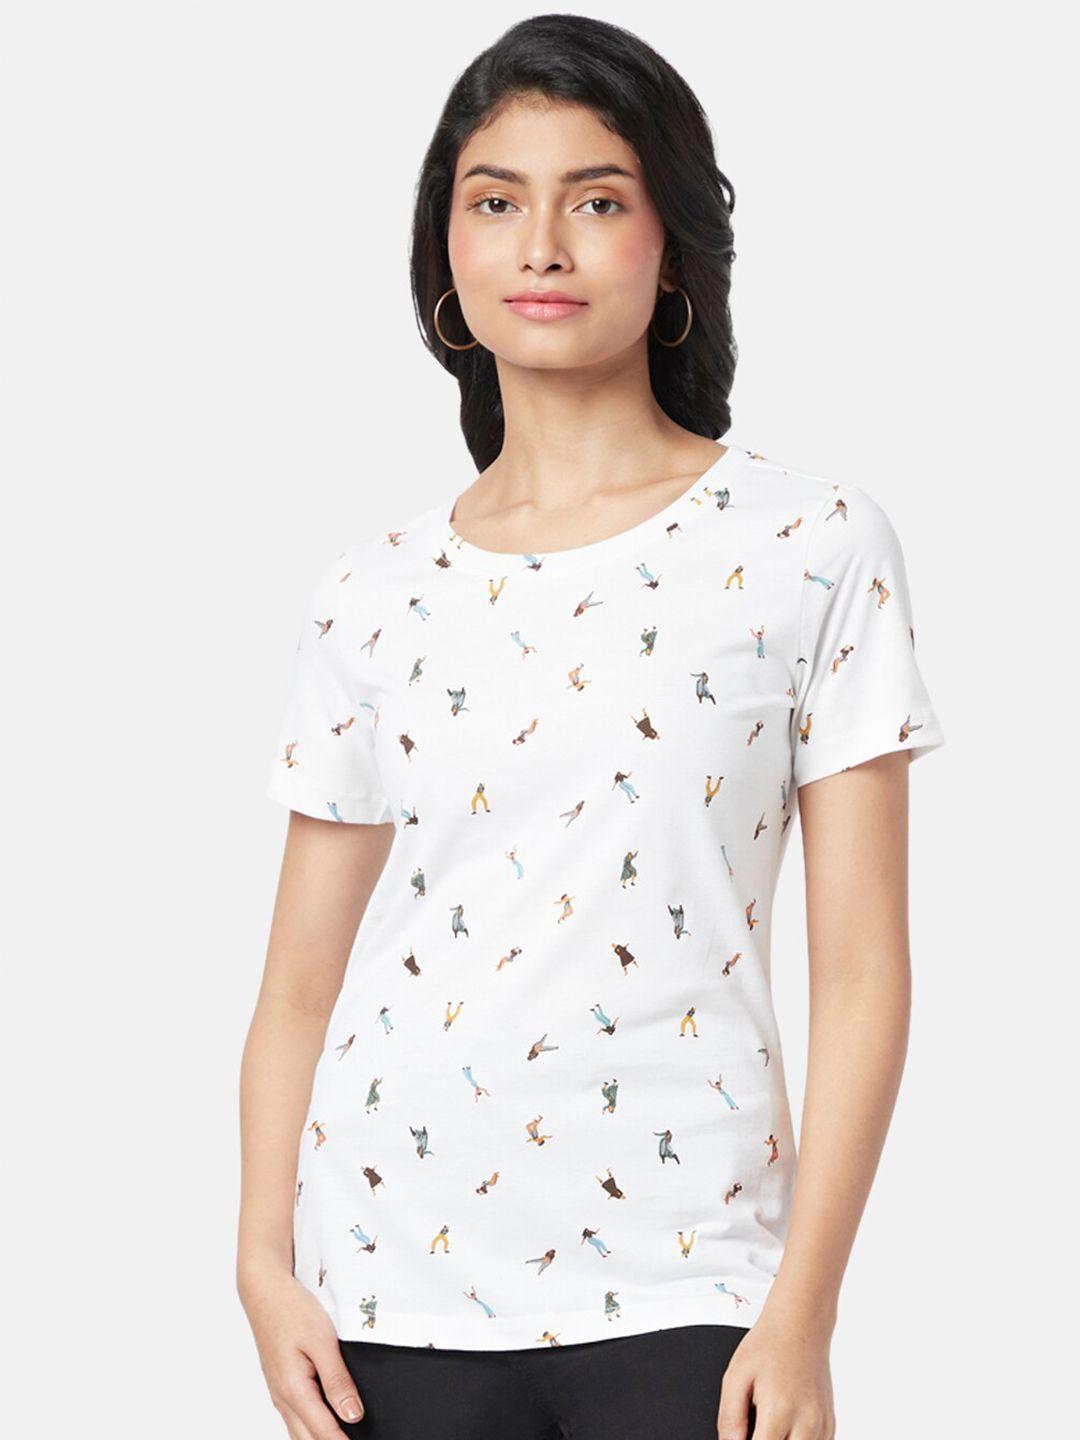 yu-by-pantaloons-women-printed-cotton-t-shirt